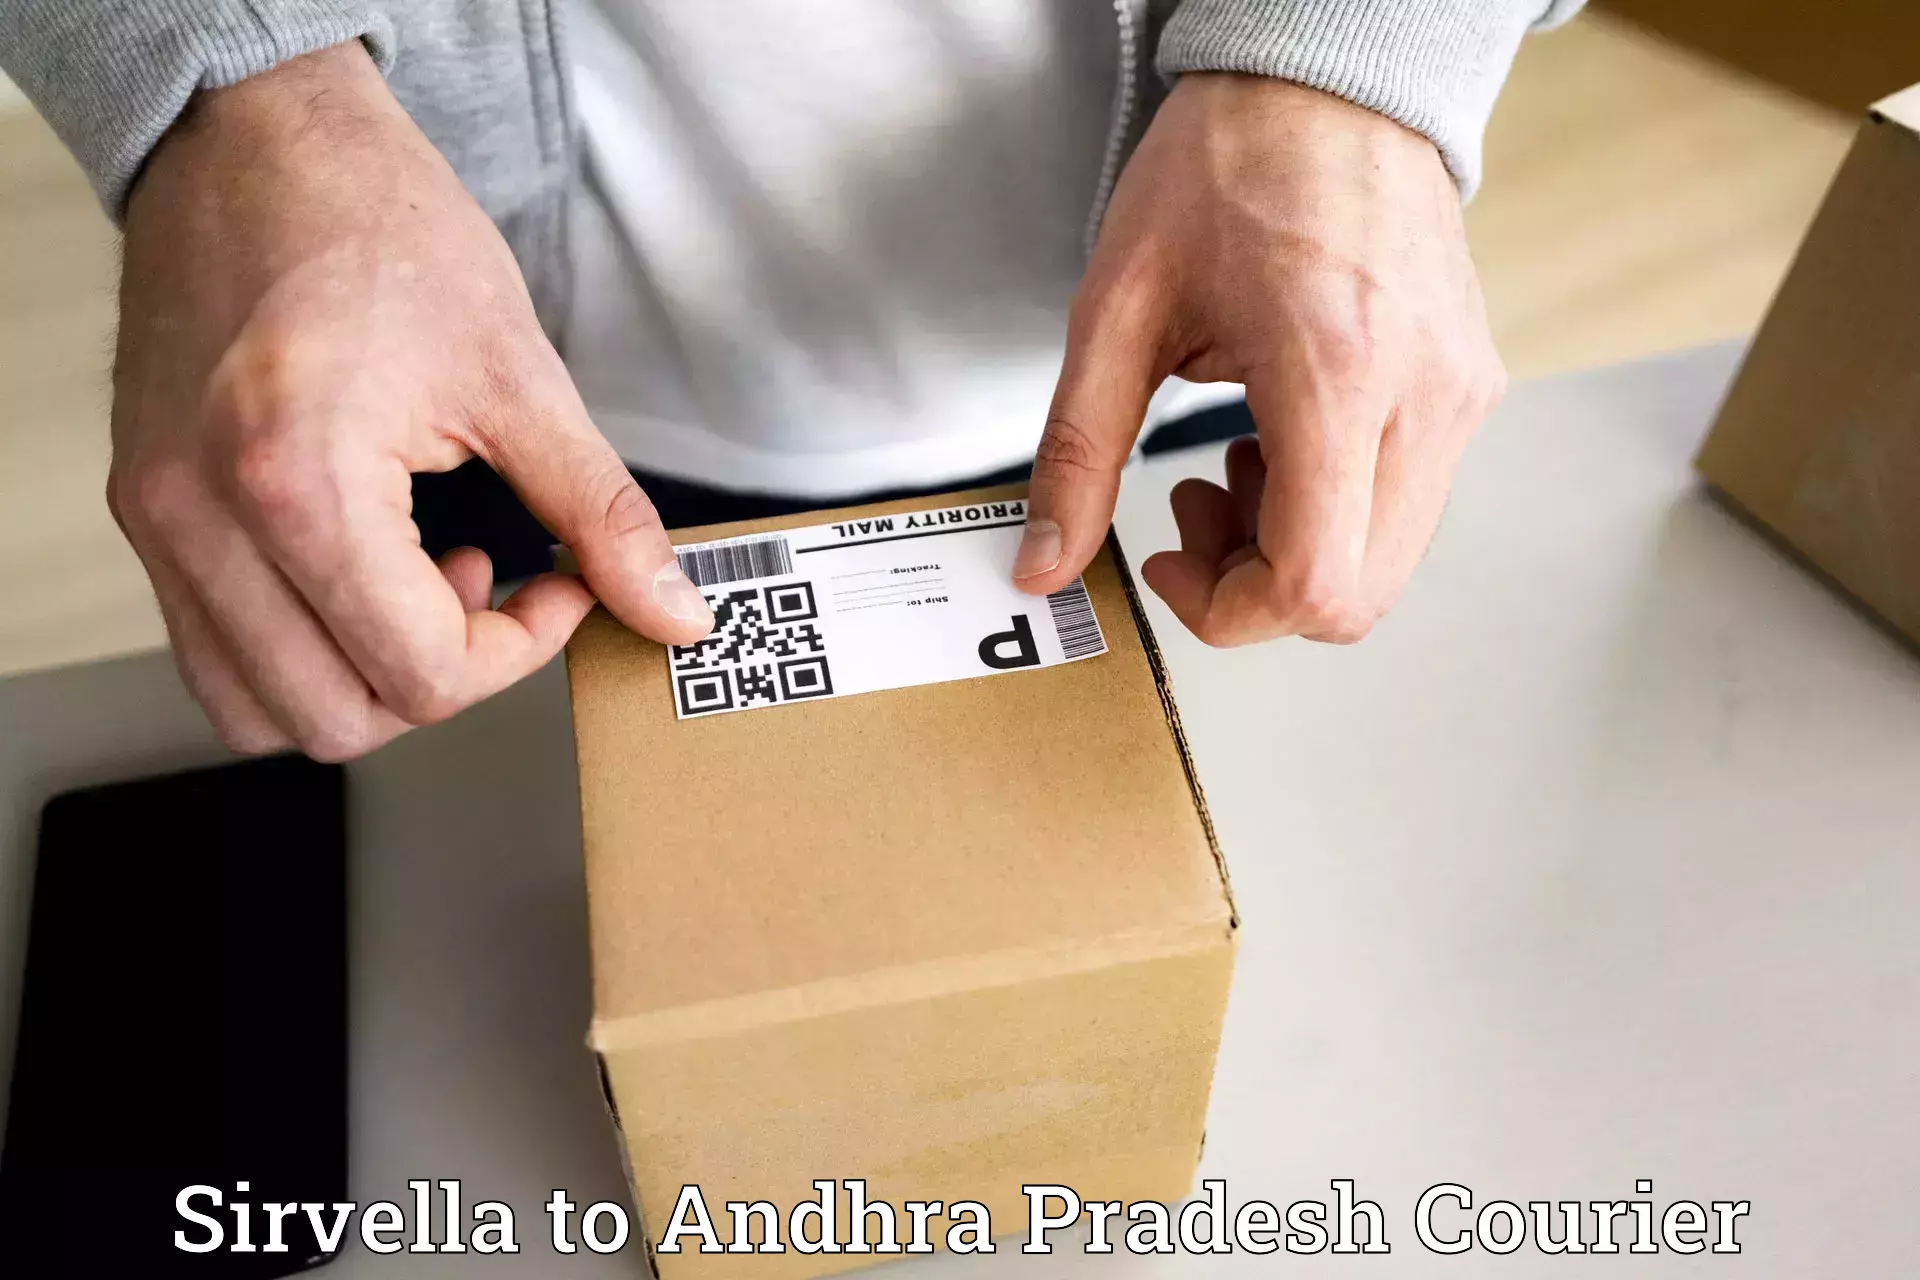 Courier service comparison Sirvella to Andhra Pradesh